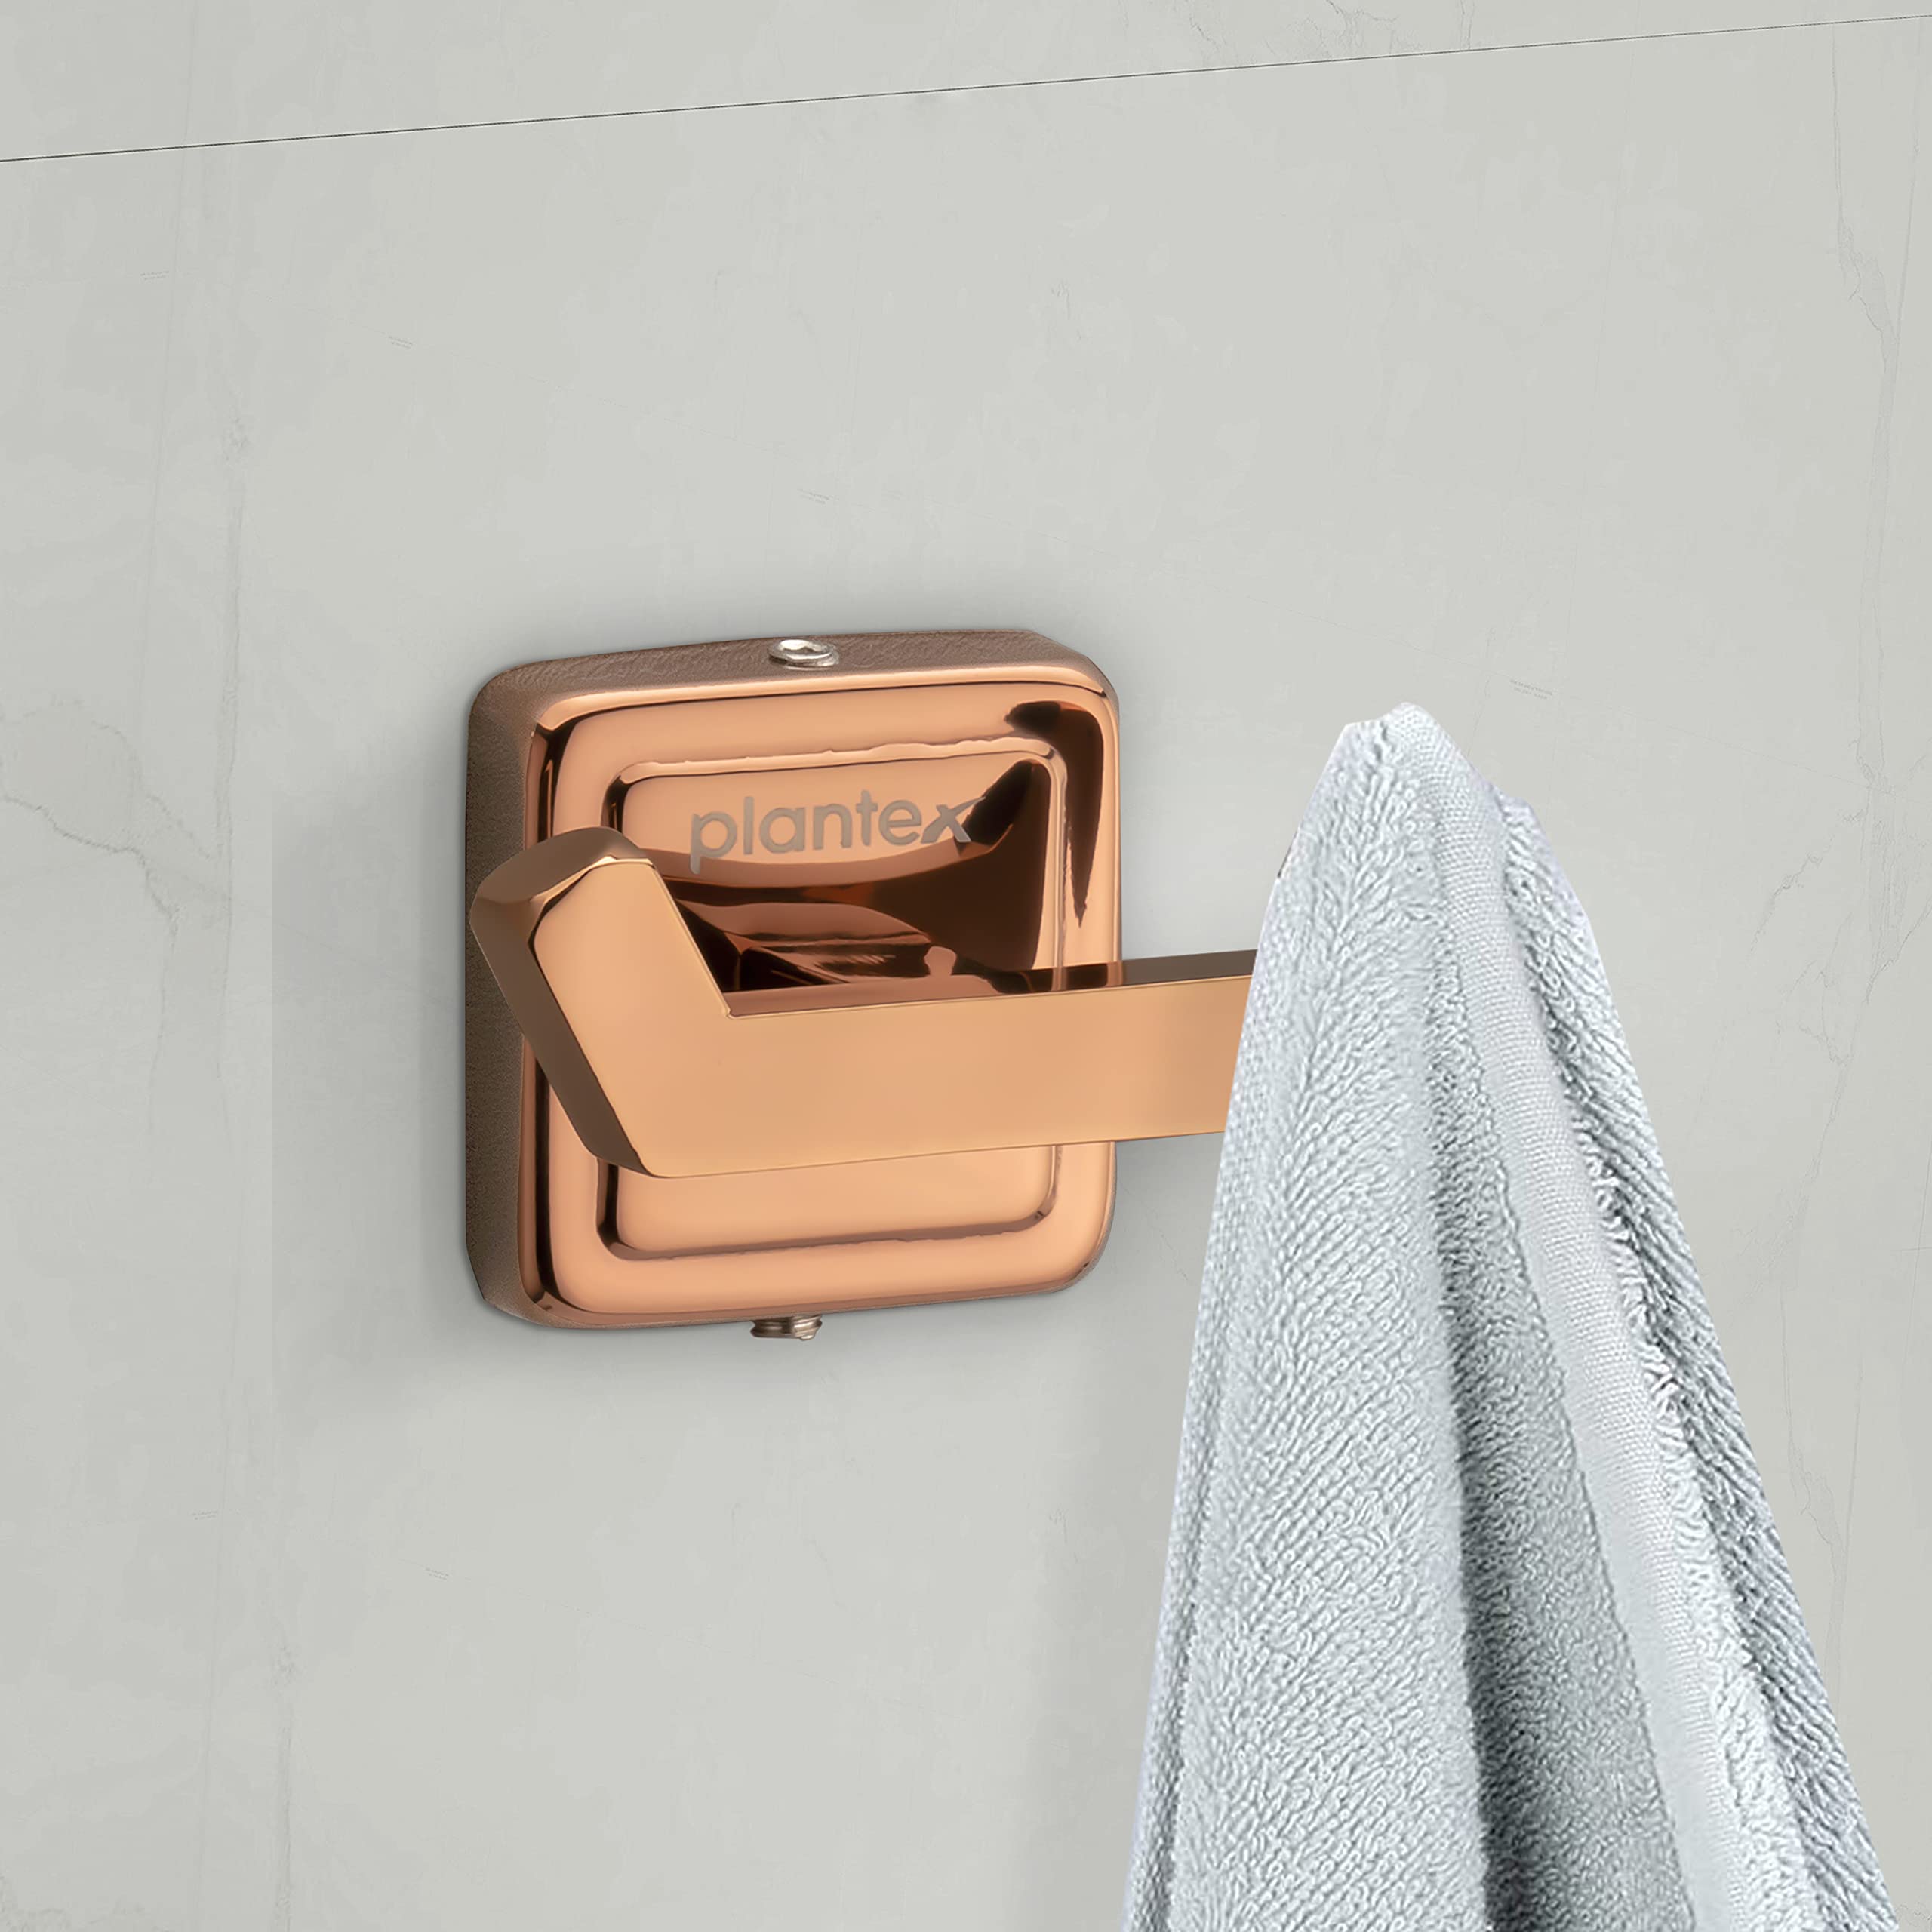 Plantex 304 Grade Stainless Steel Decan Robe Hook/Cloth-Towel Hanger/Door Hanger-Hook/Bathroom Accessories - Pack of 3 (651 - PVD Rose Gold)